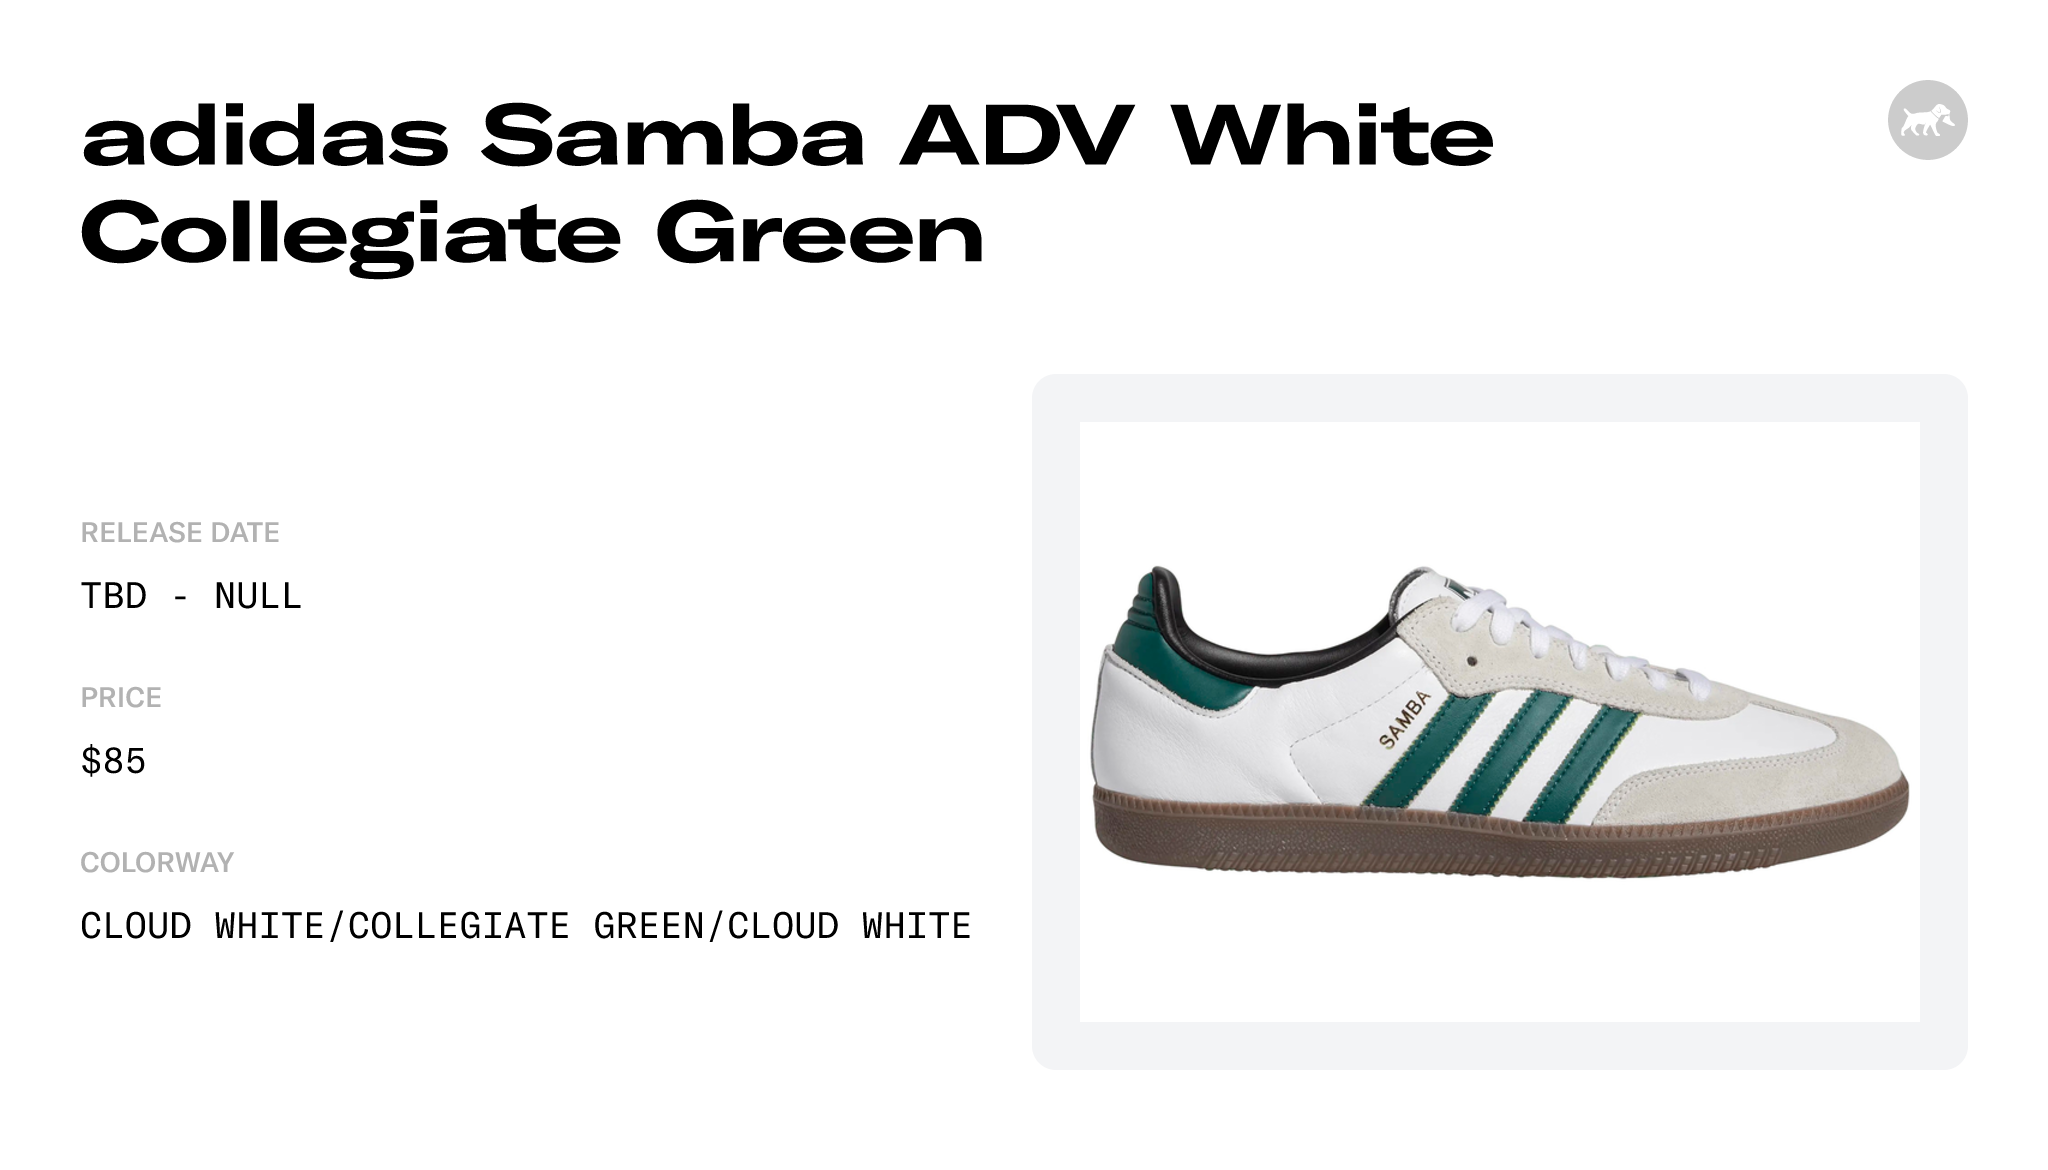 adidas Samba ADV White Collegiate Green - GY6940 Raffles and